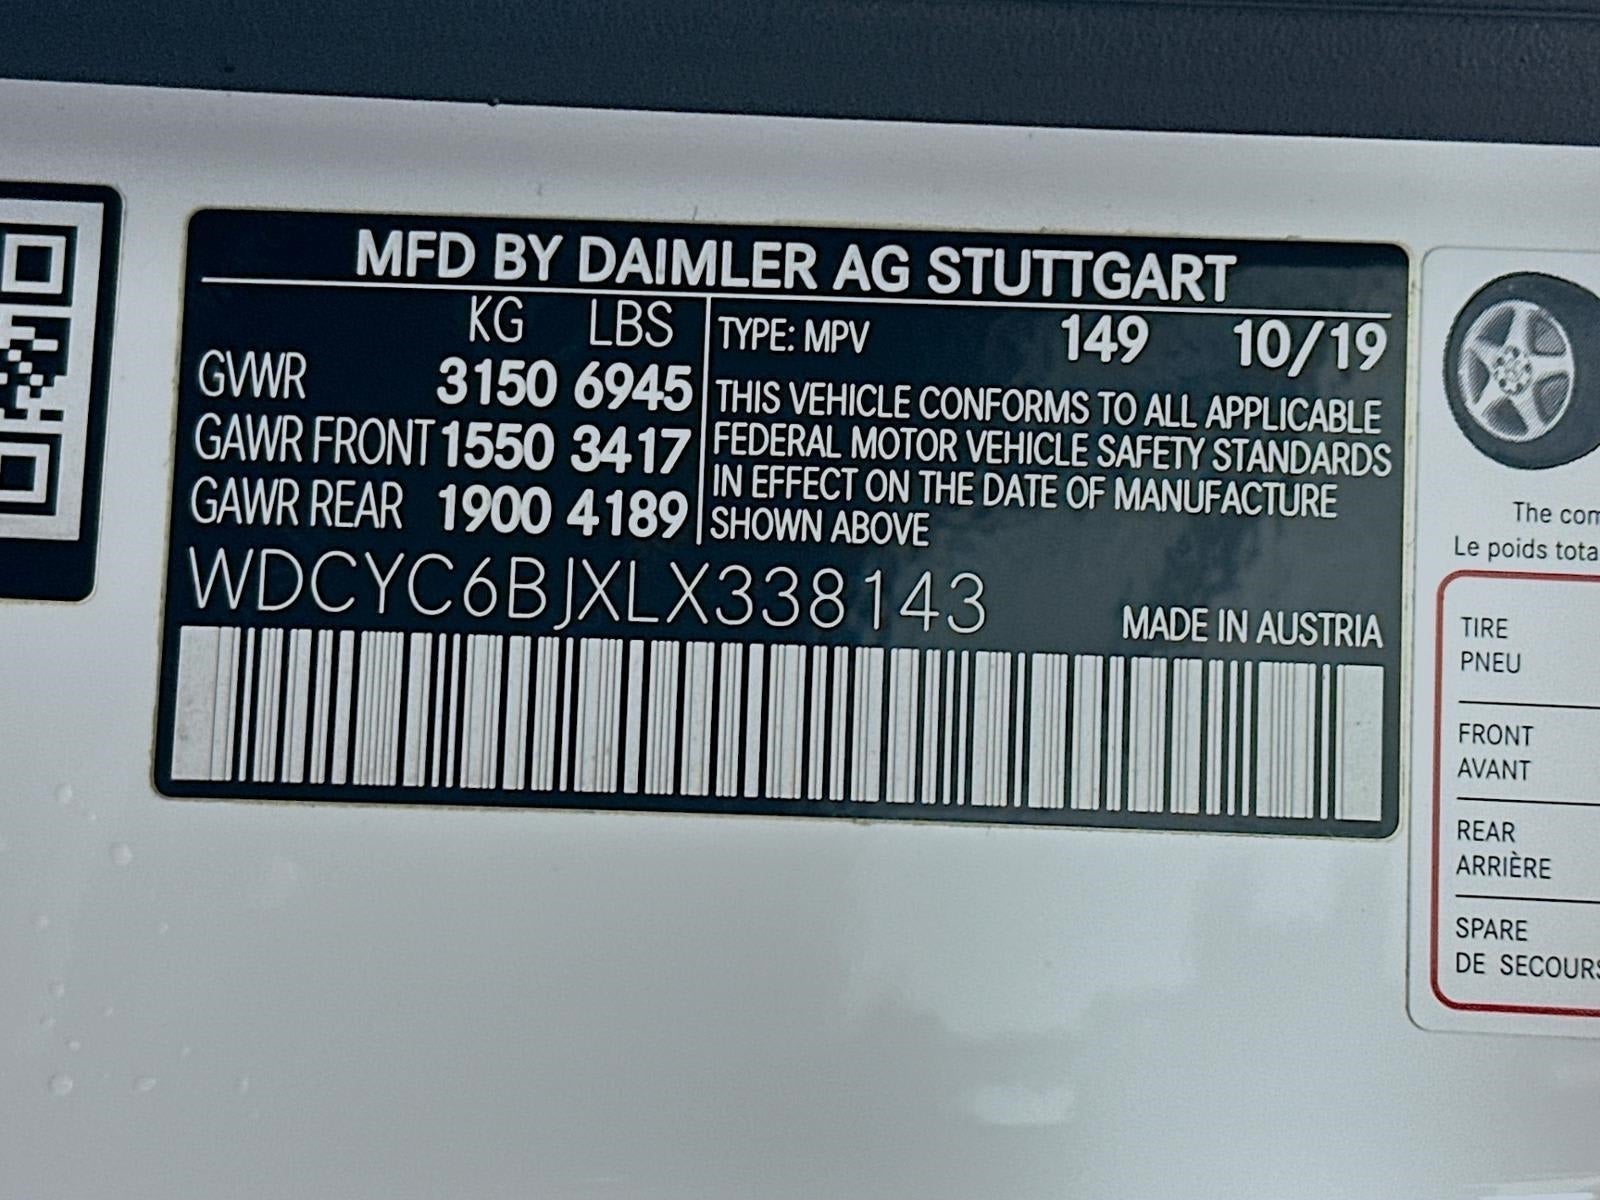 2020 Mercedes-Benz G 550 G 550 4MATIC® SUV